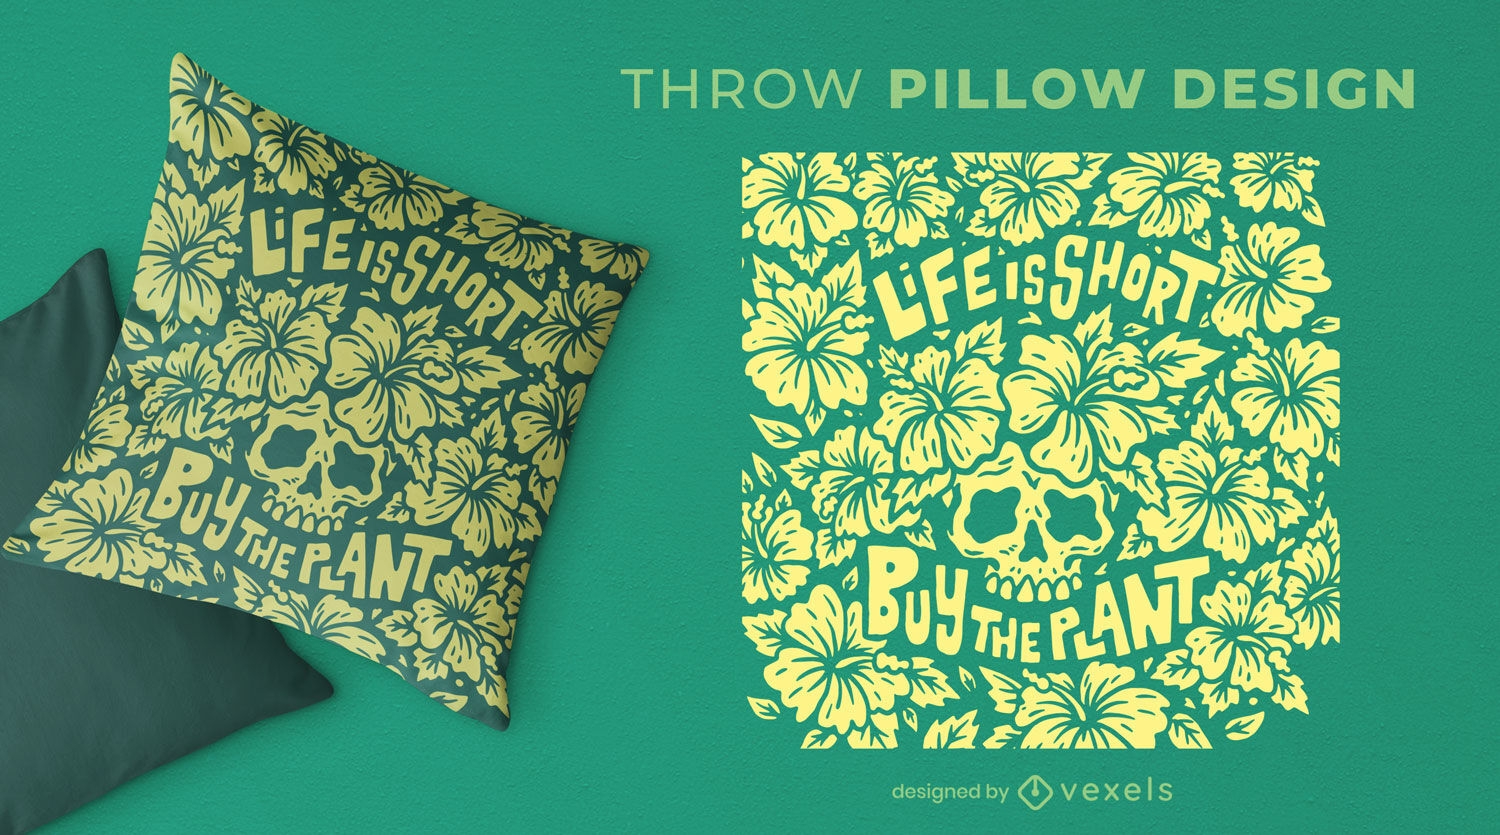 Houseplant skull quote throw pillow design